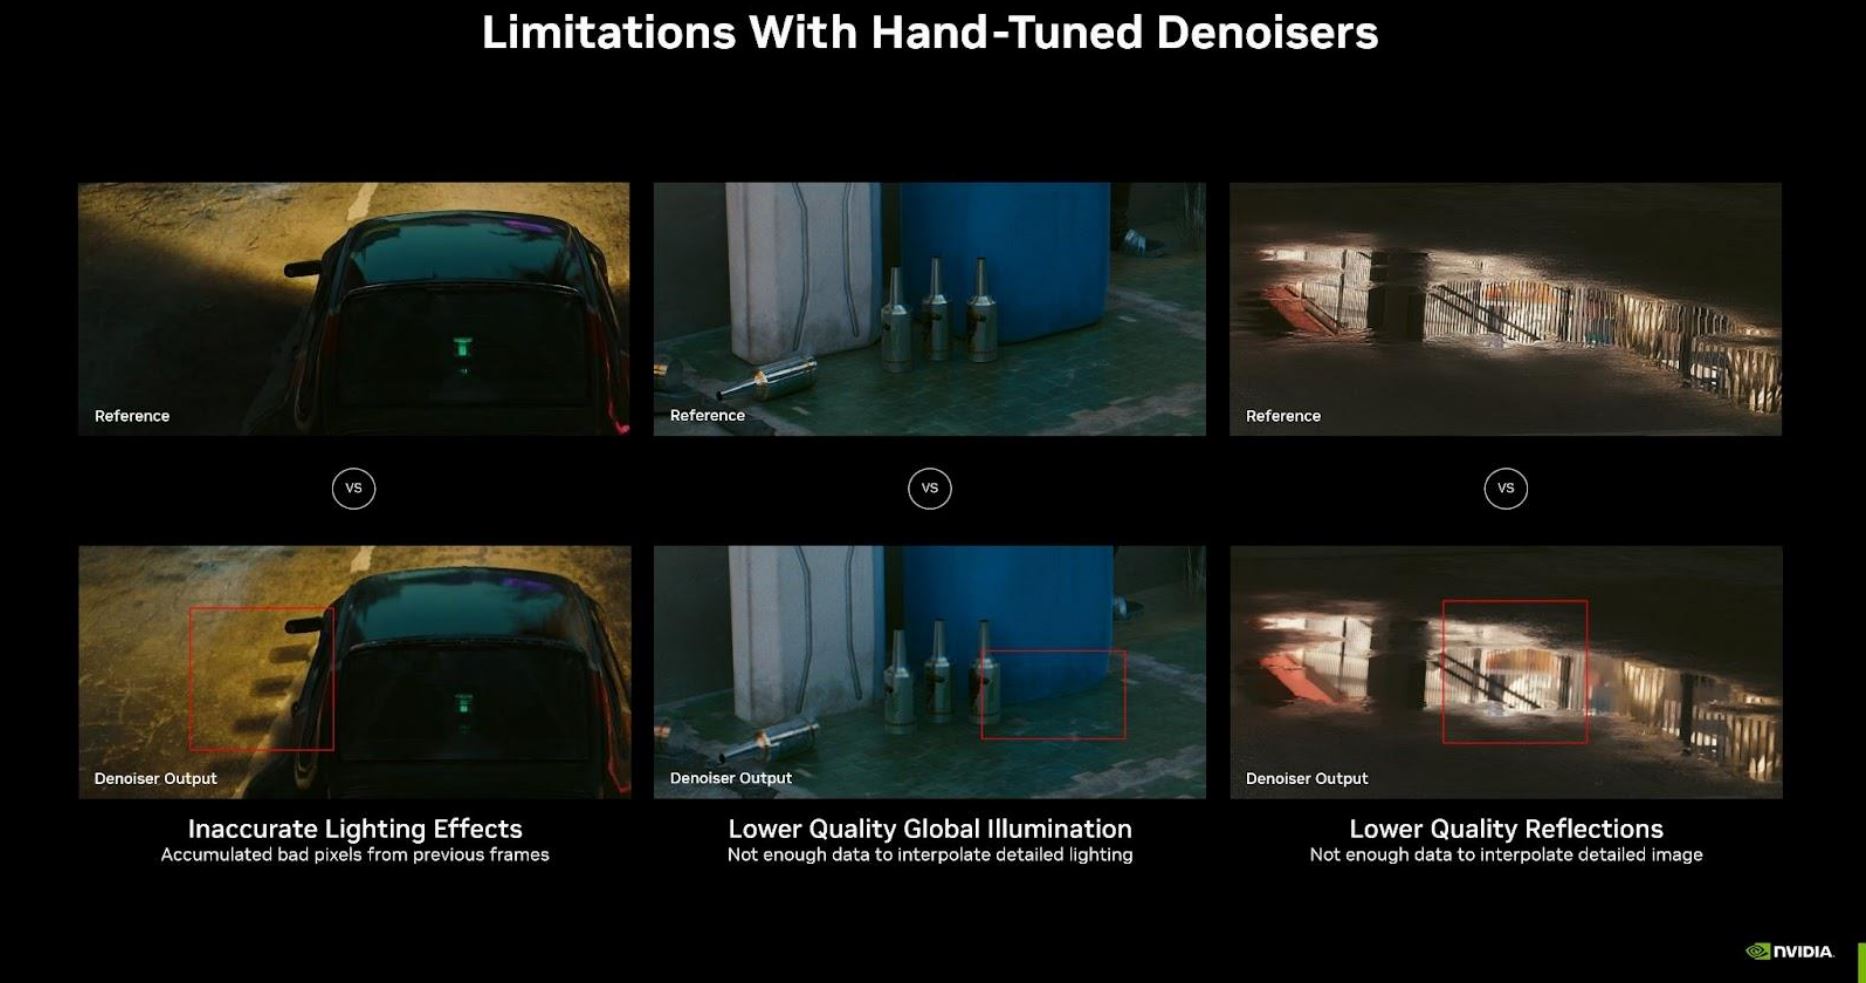 A slide describing the limitations of denoisers.